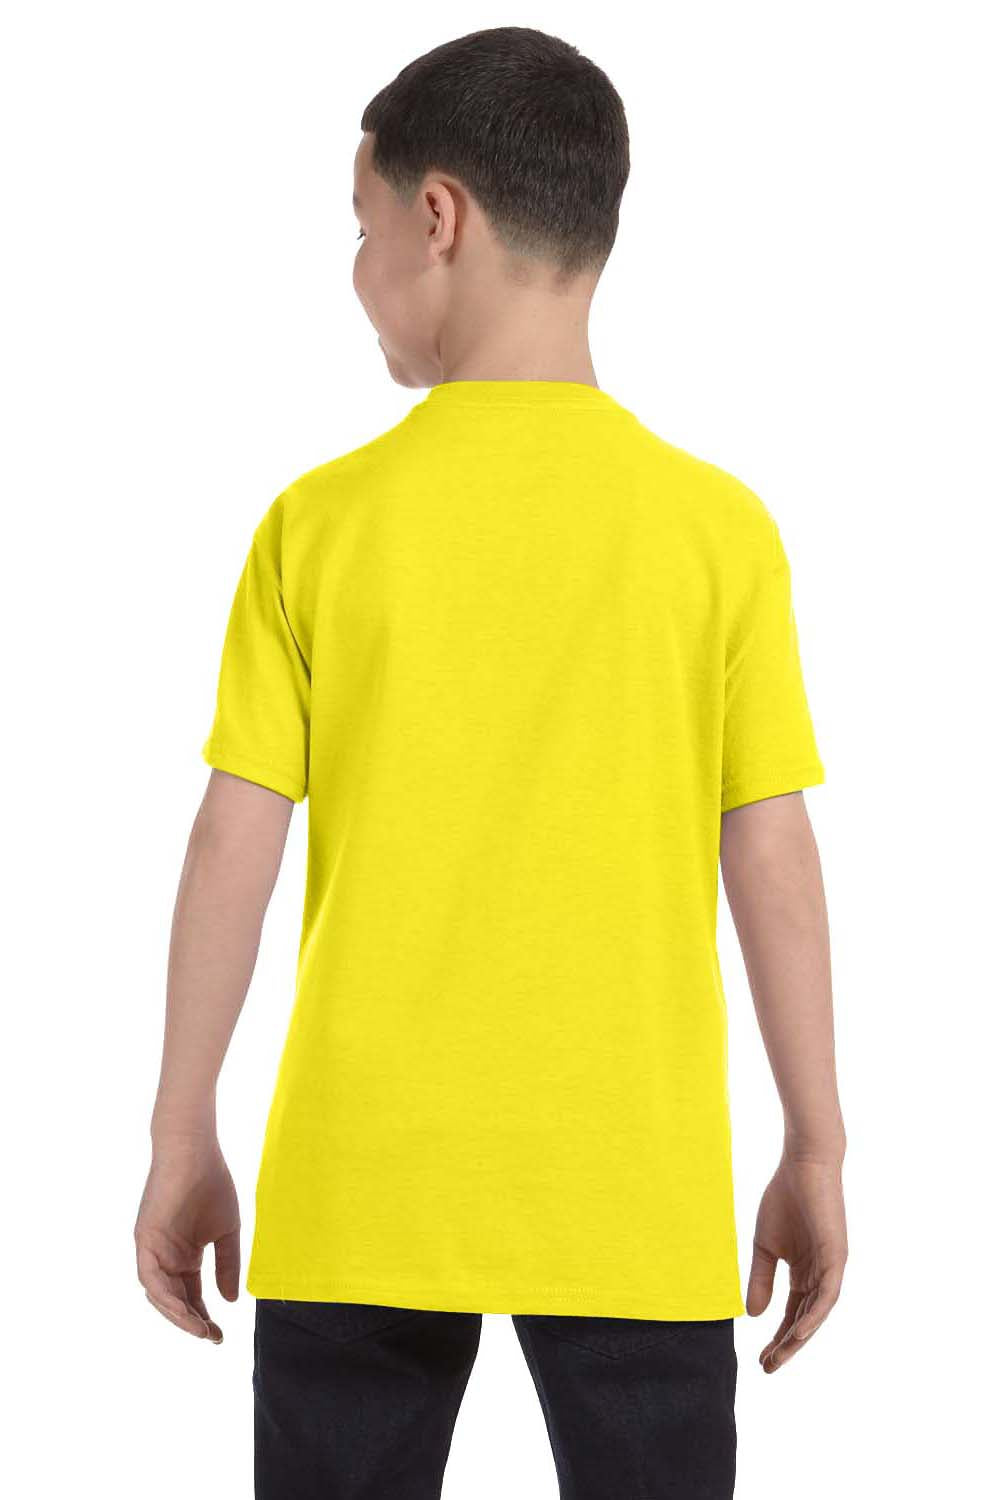 Jerzees 29B Youth Dri-Power Moisture Wicking Short Sleeve Crewneck T-Shirt Neon Yellow Back